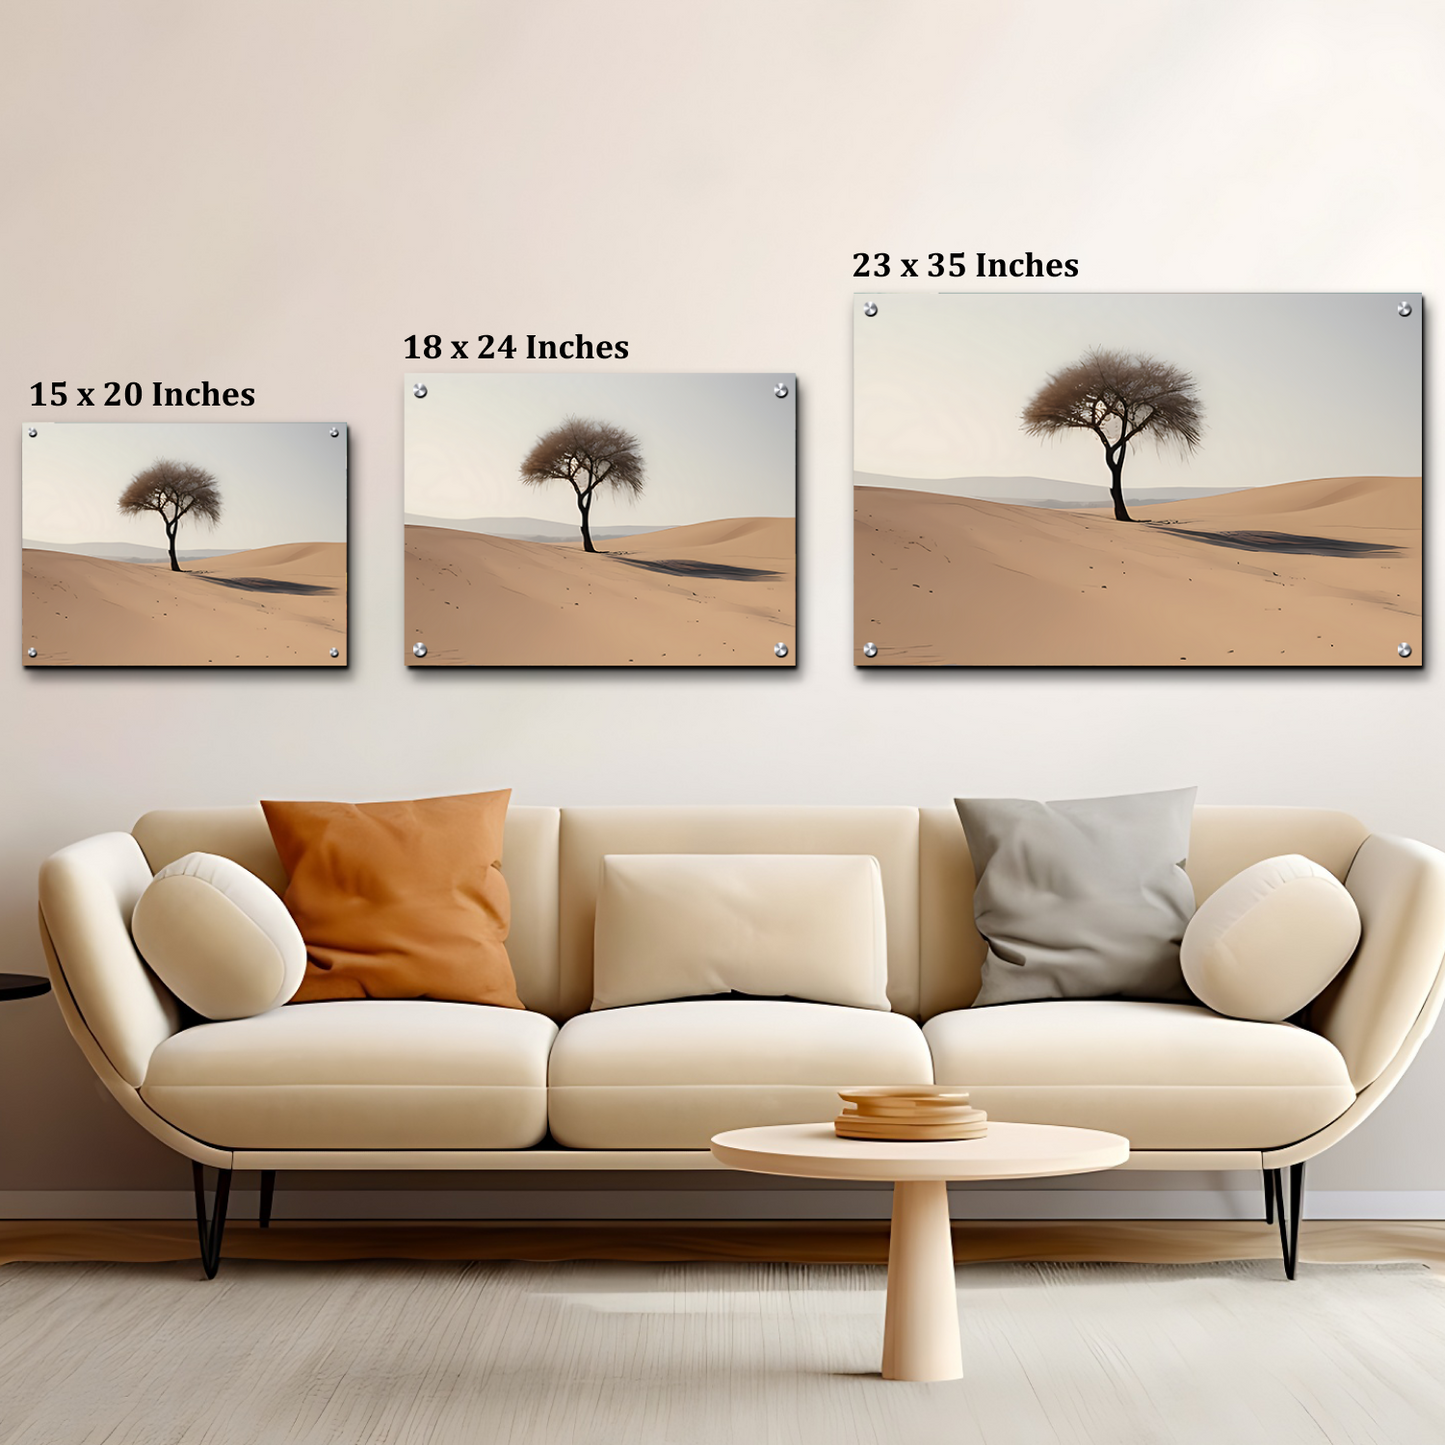 Tree In Desert Motivational Positive Luxury Wall Art Painting